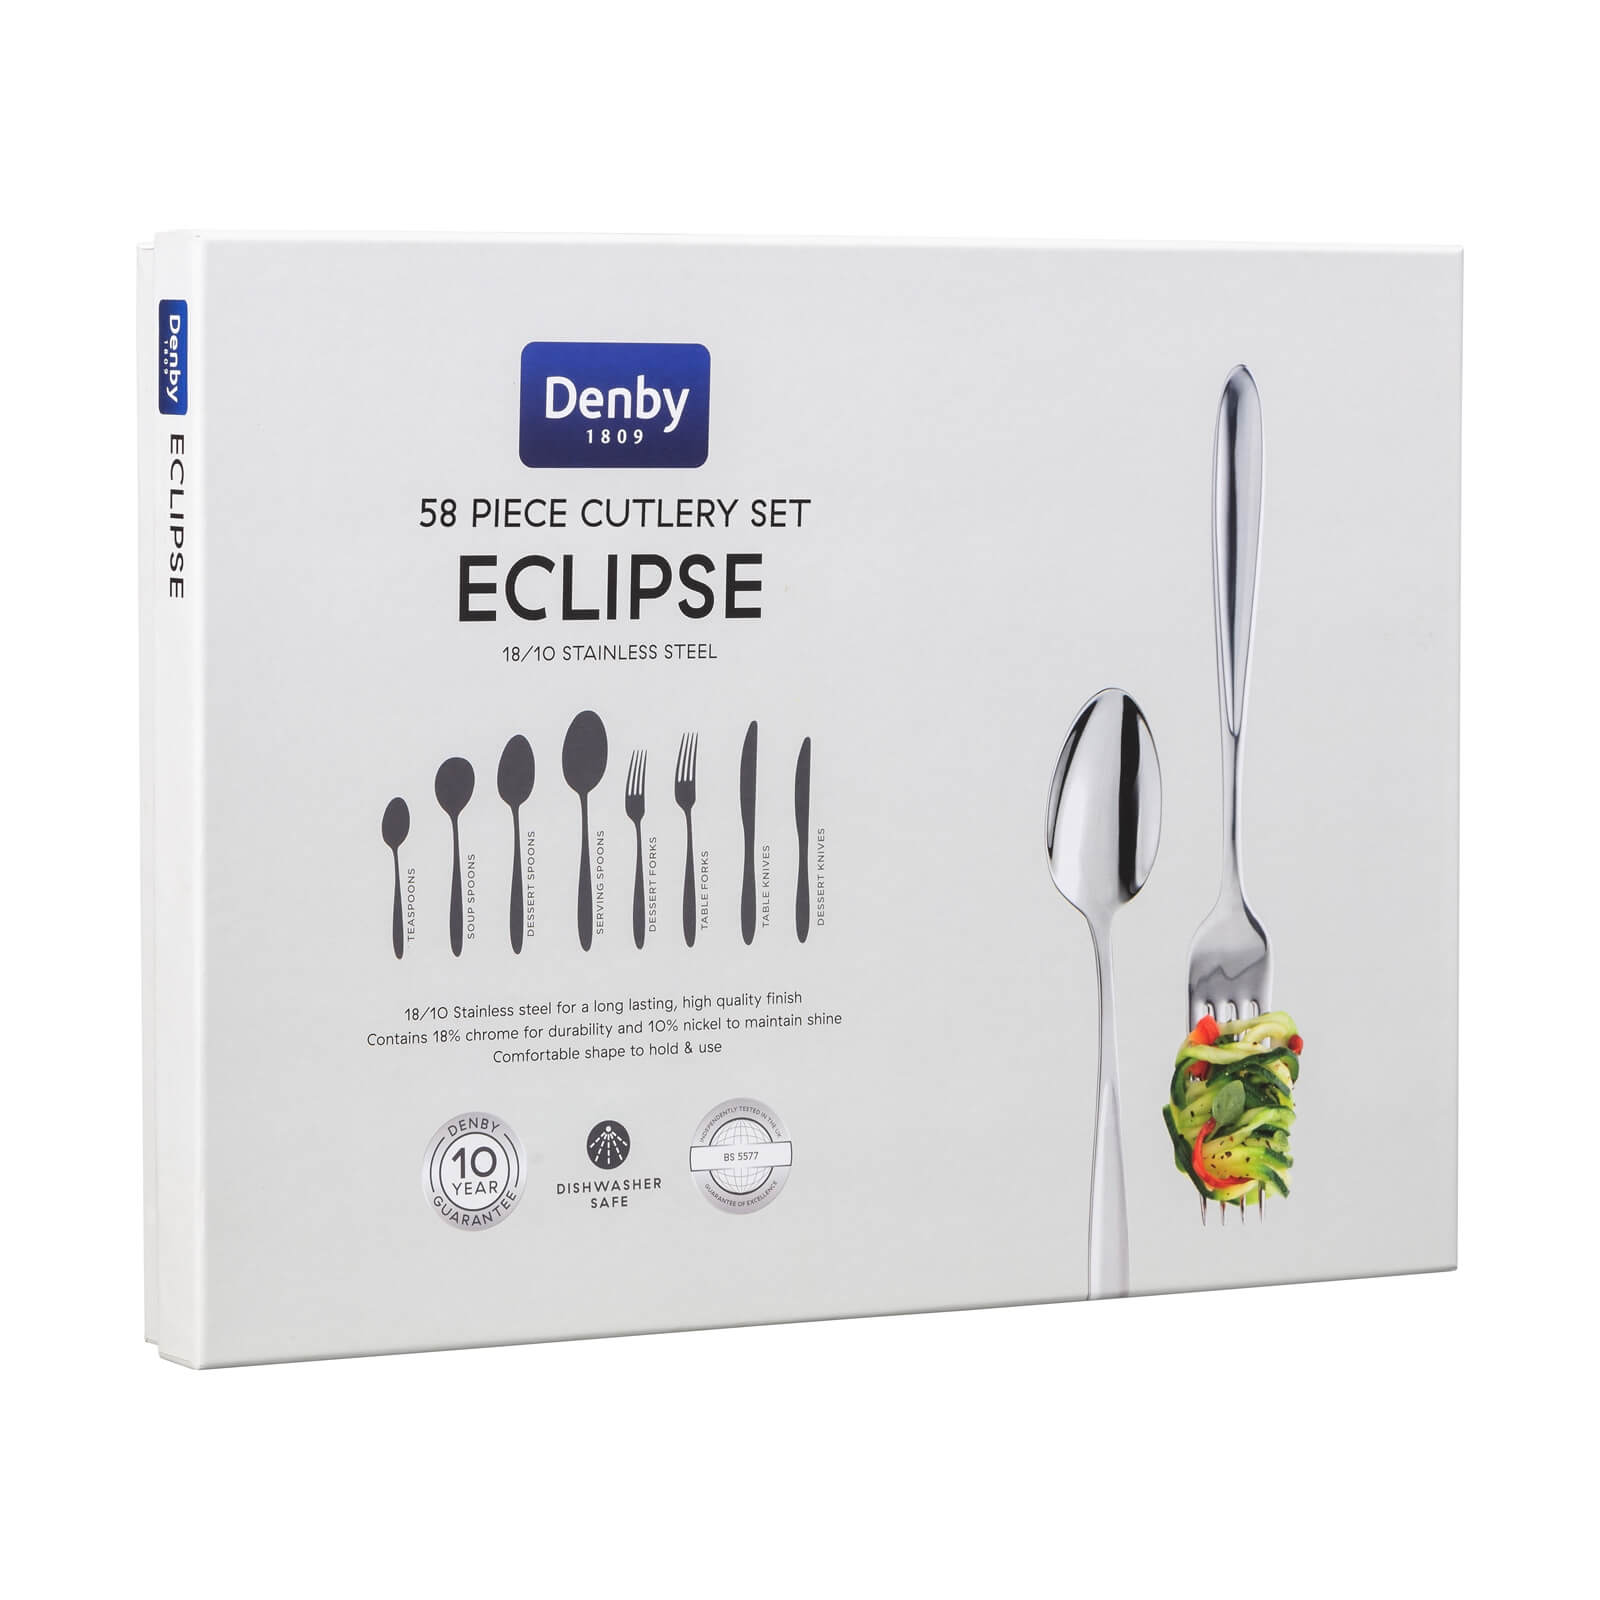 Denby Eclipse Cutlery Set - 58 Pieces